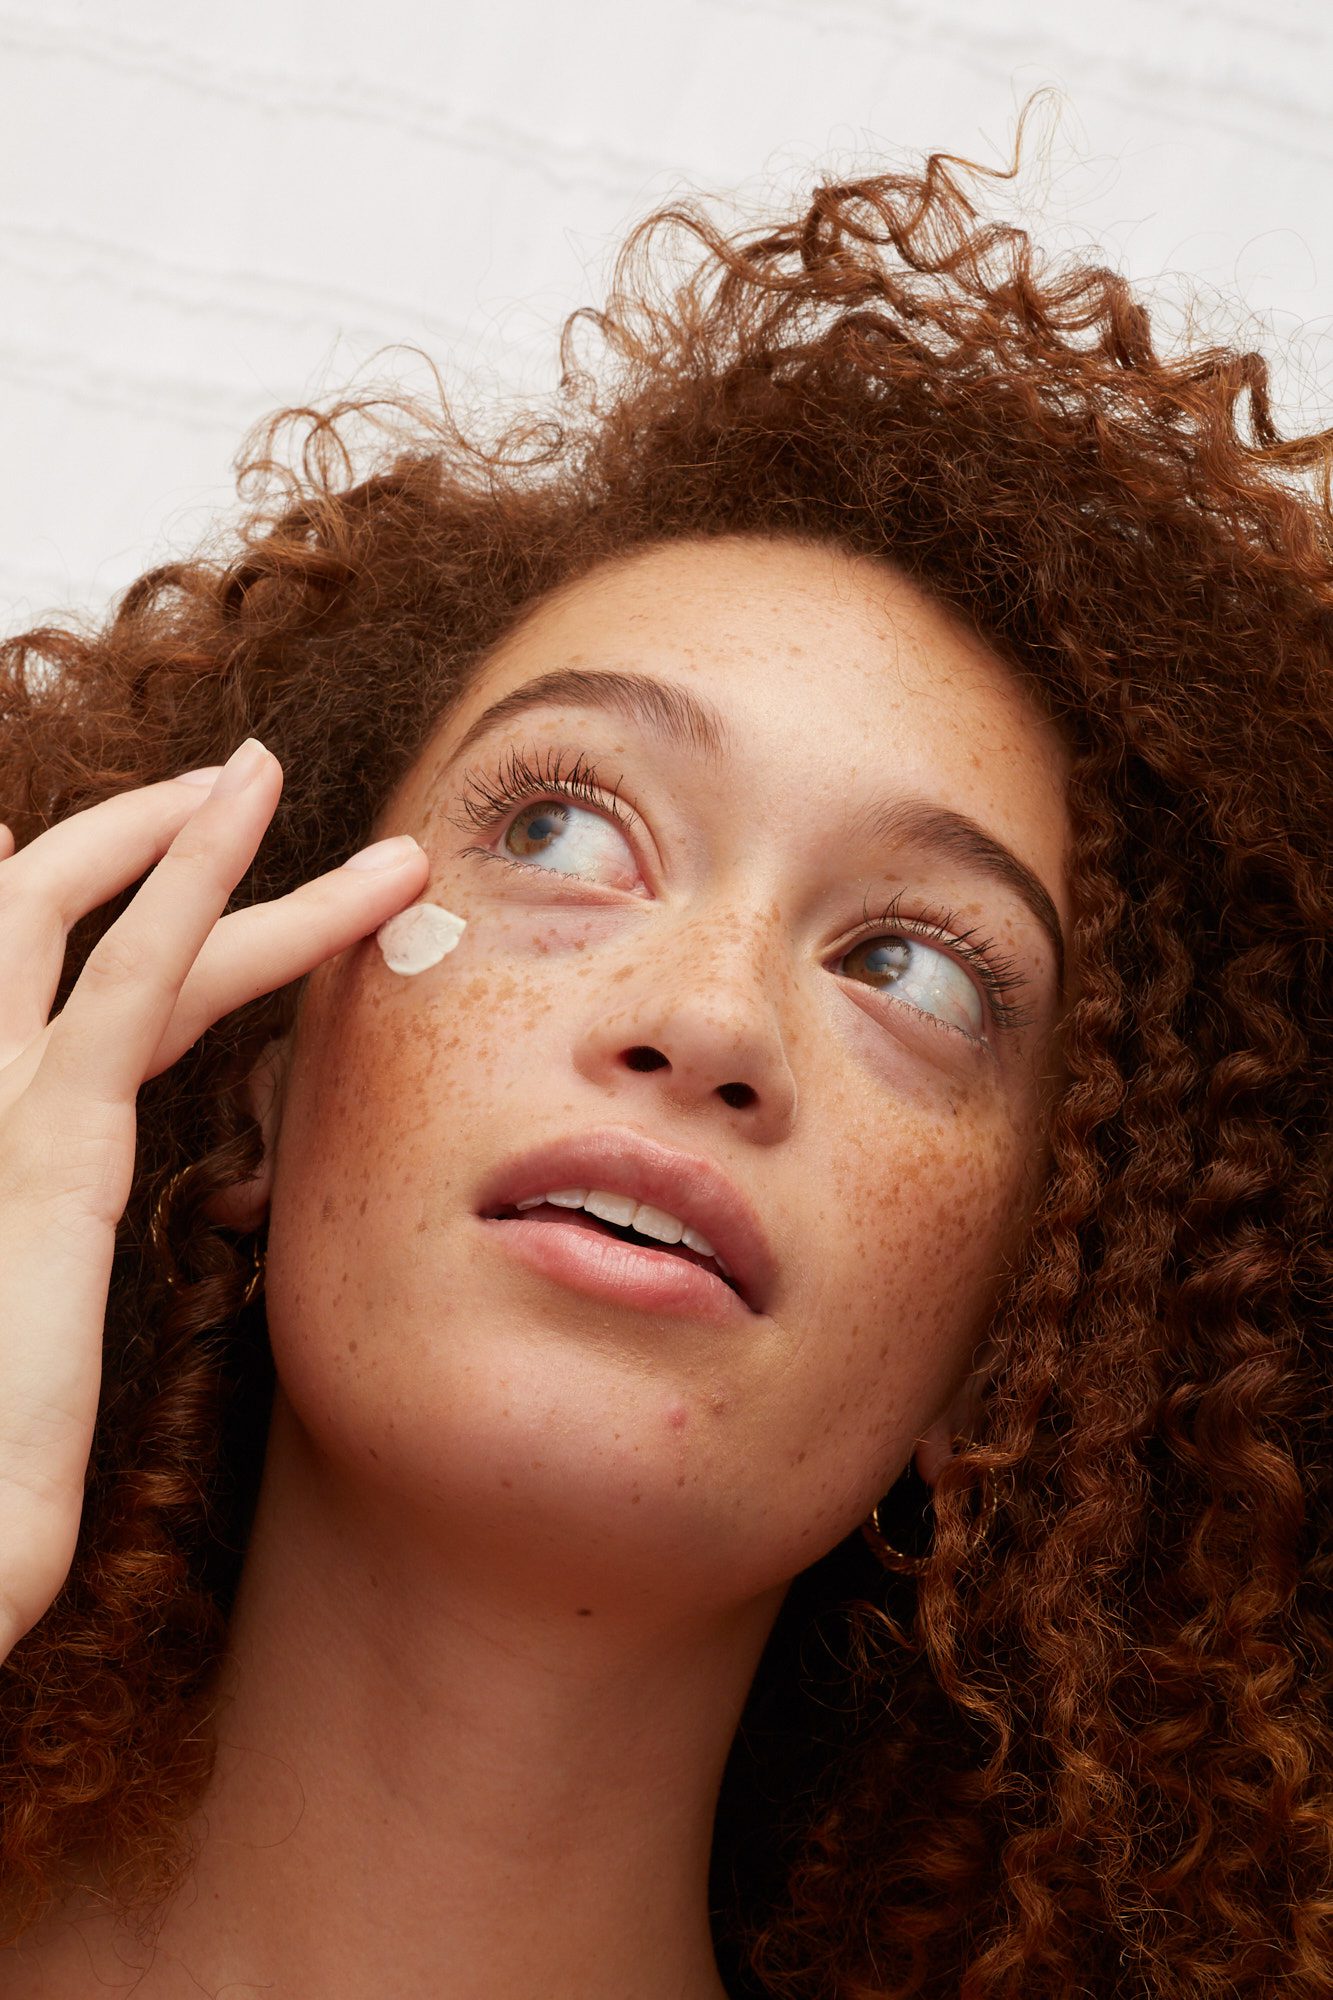 Benefits of Using An Eye Cream